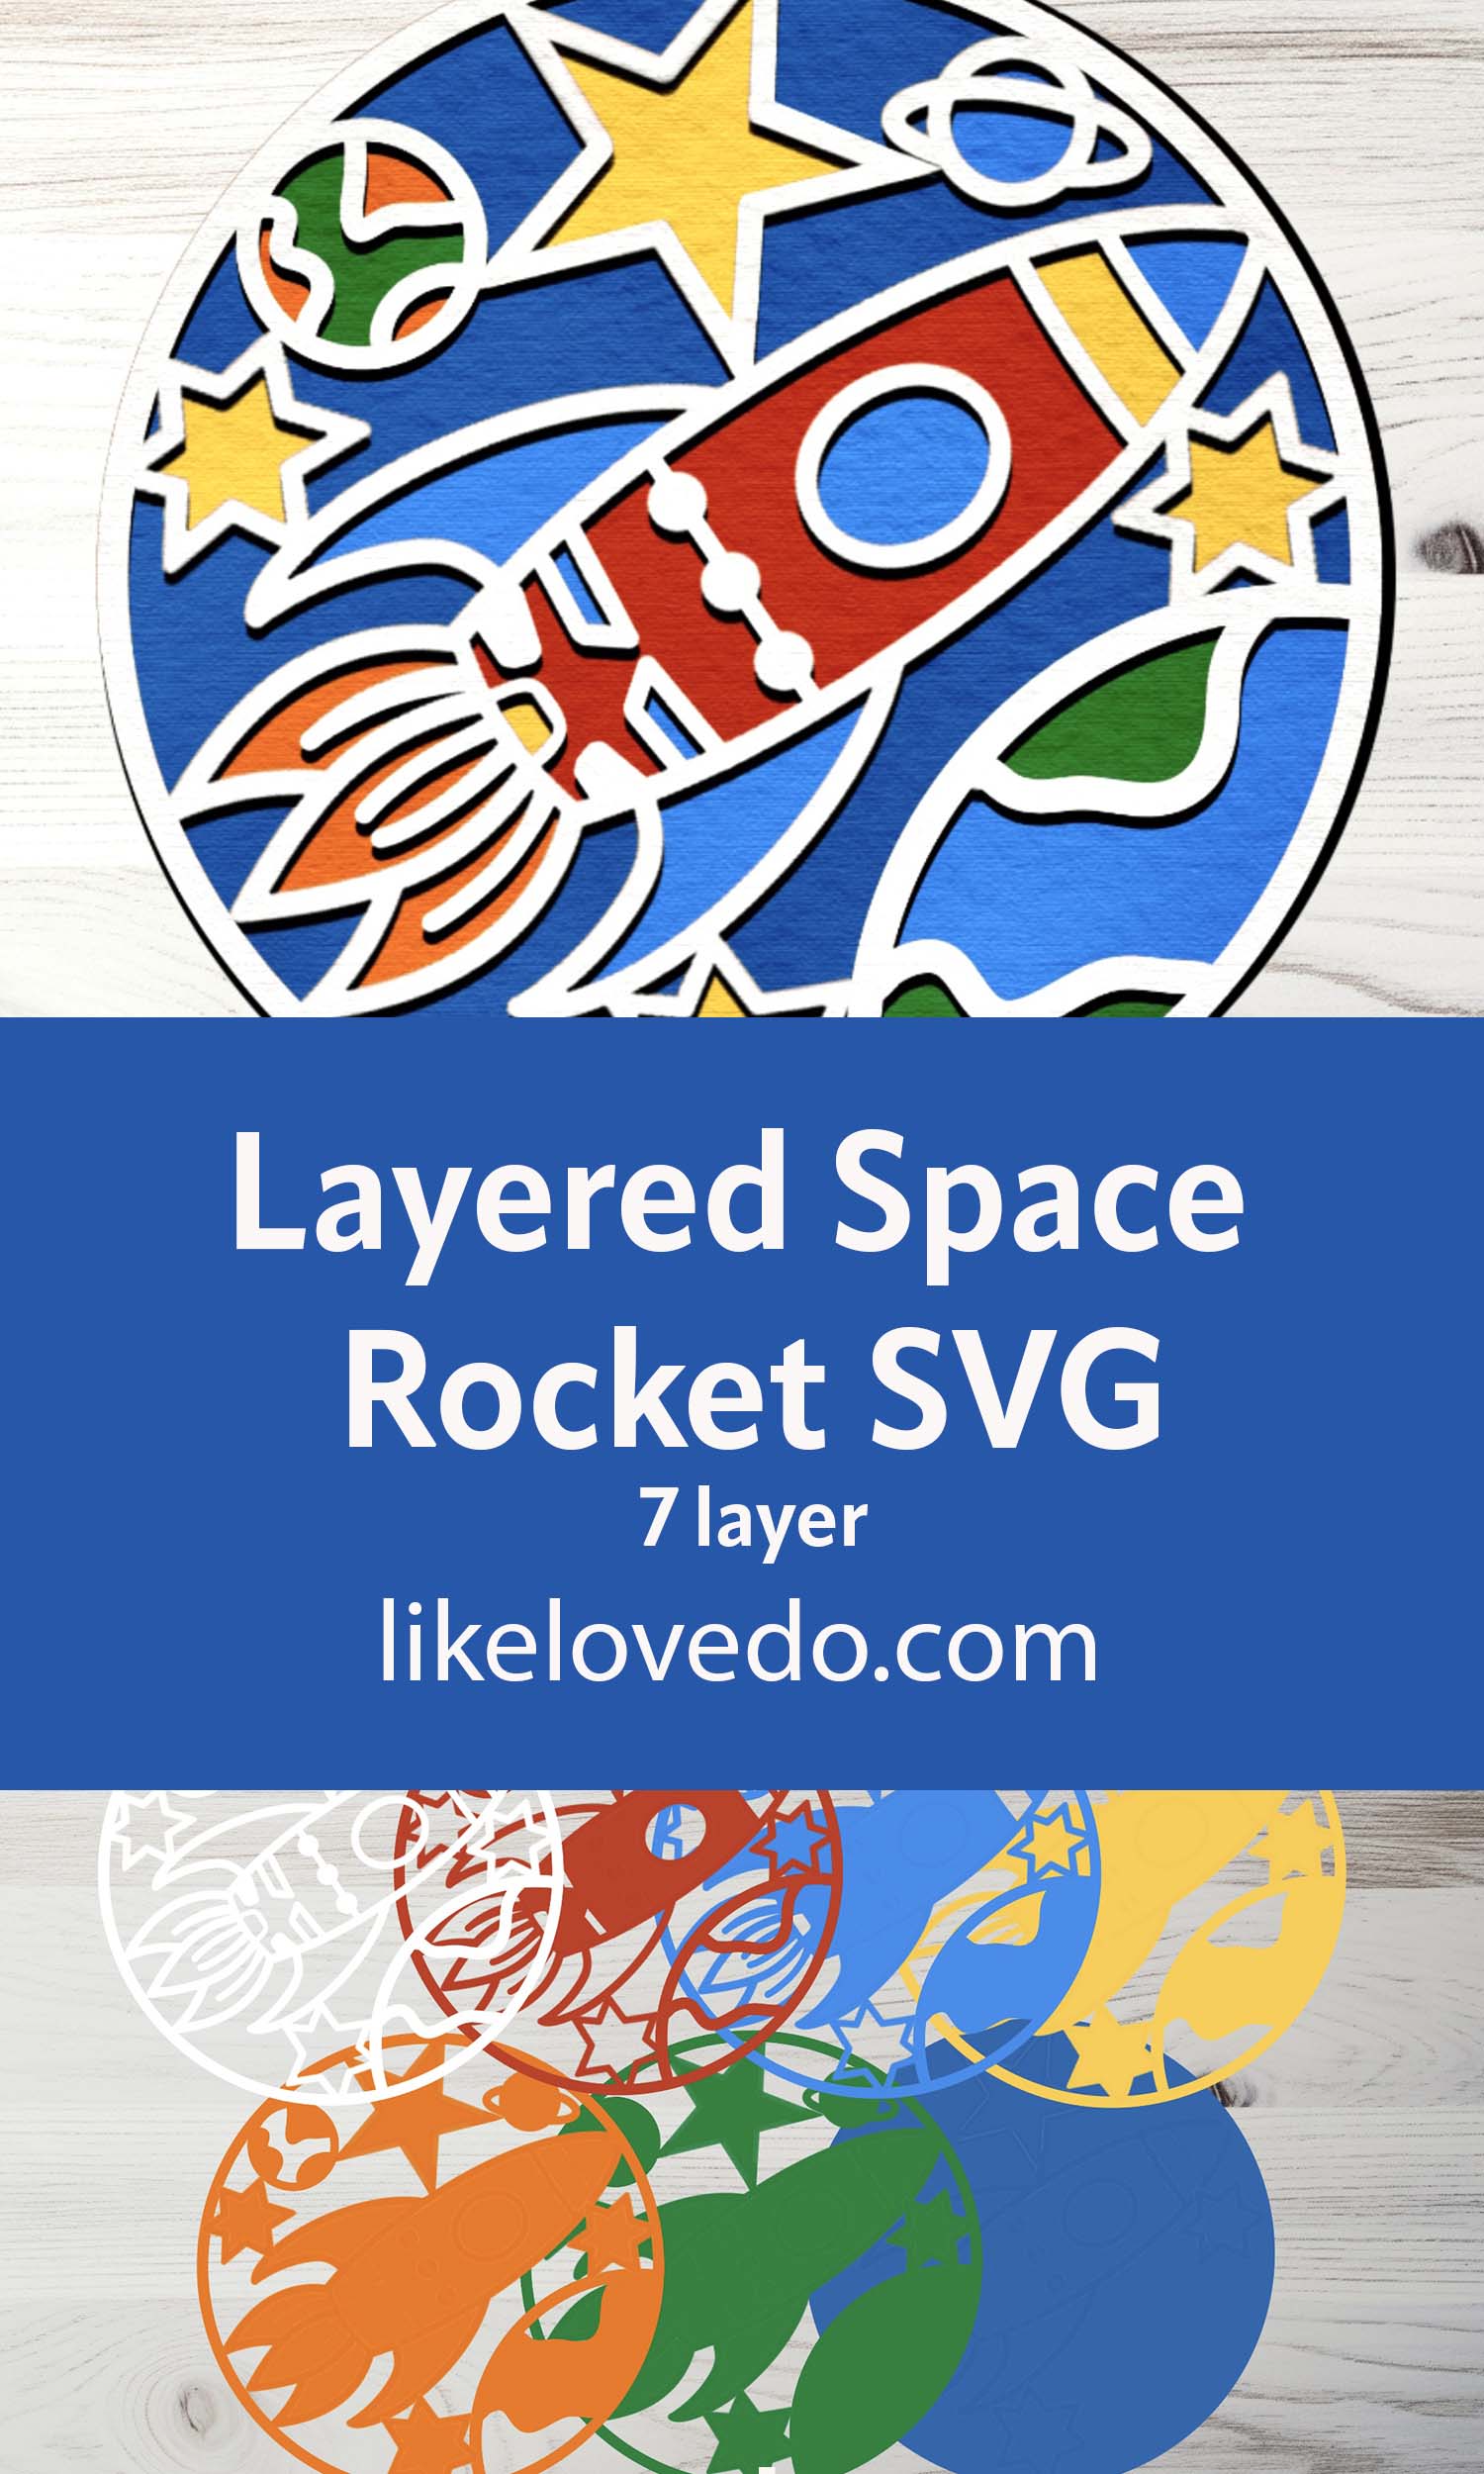 Layered Space Rocket SVG